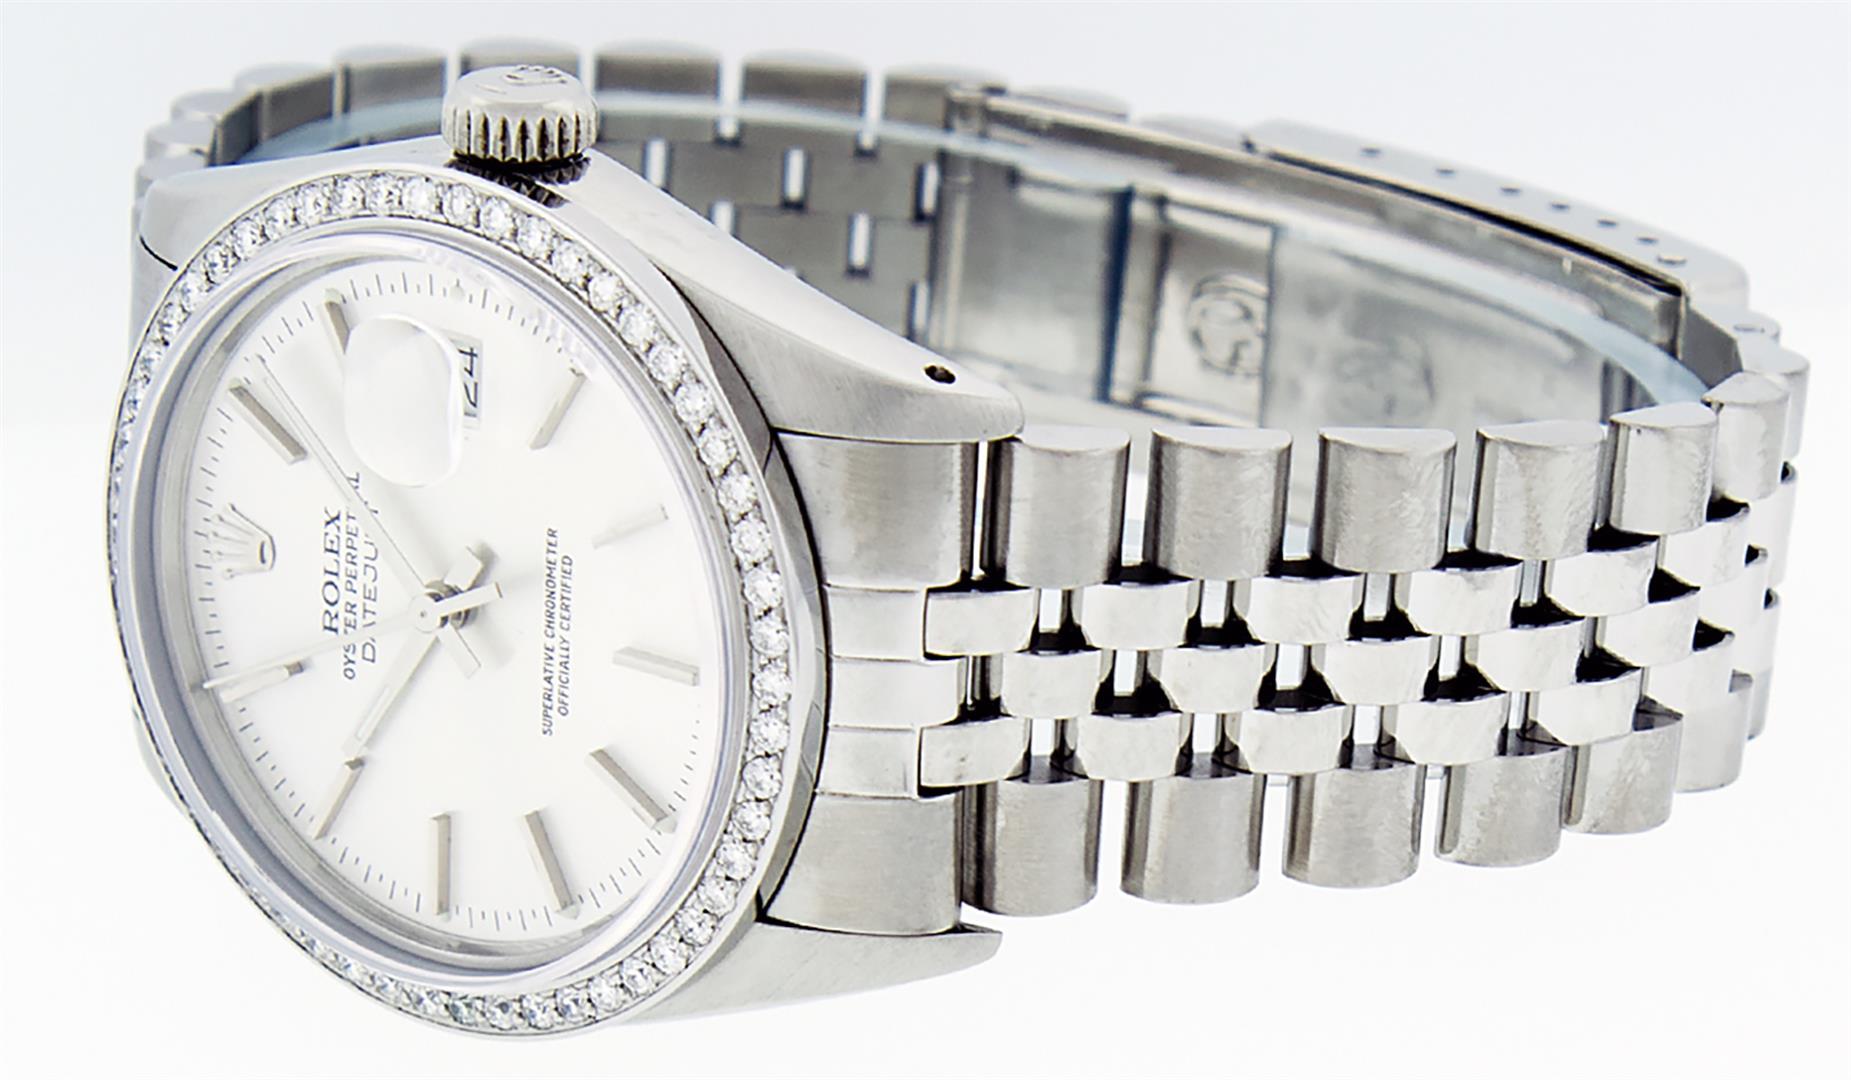 Rolex Mens Stainless Steel Silver Index Diamond Bezel Datejust Wristwatch 36MM